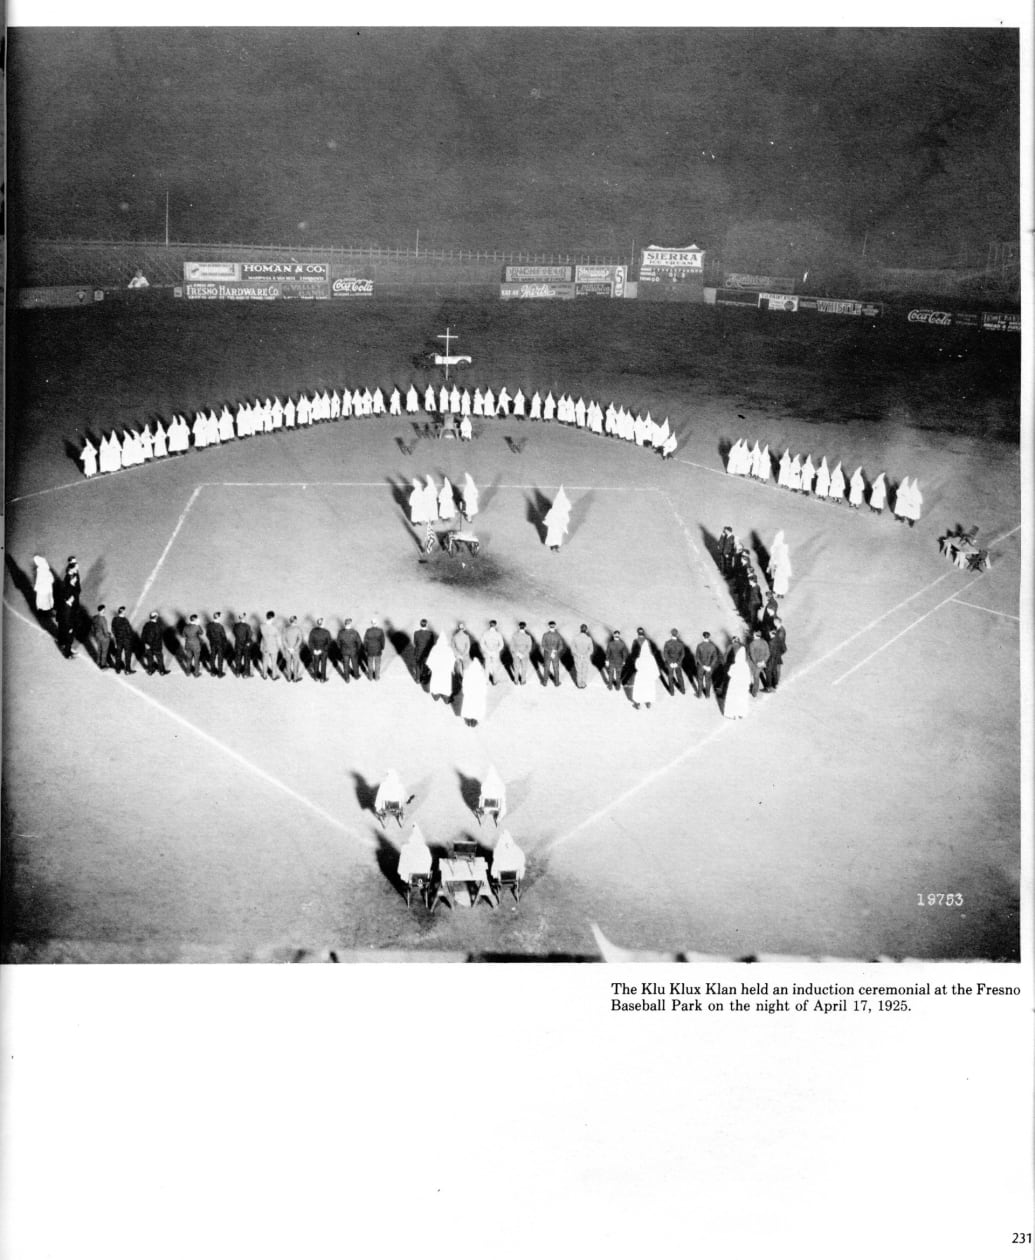 A KKK meeting is held at a ballpark